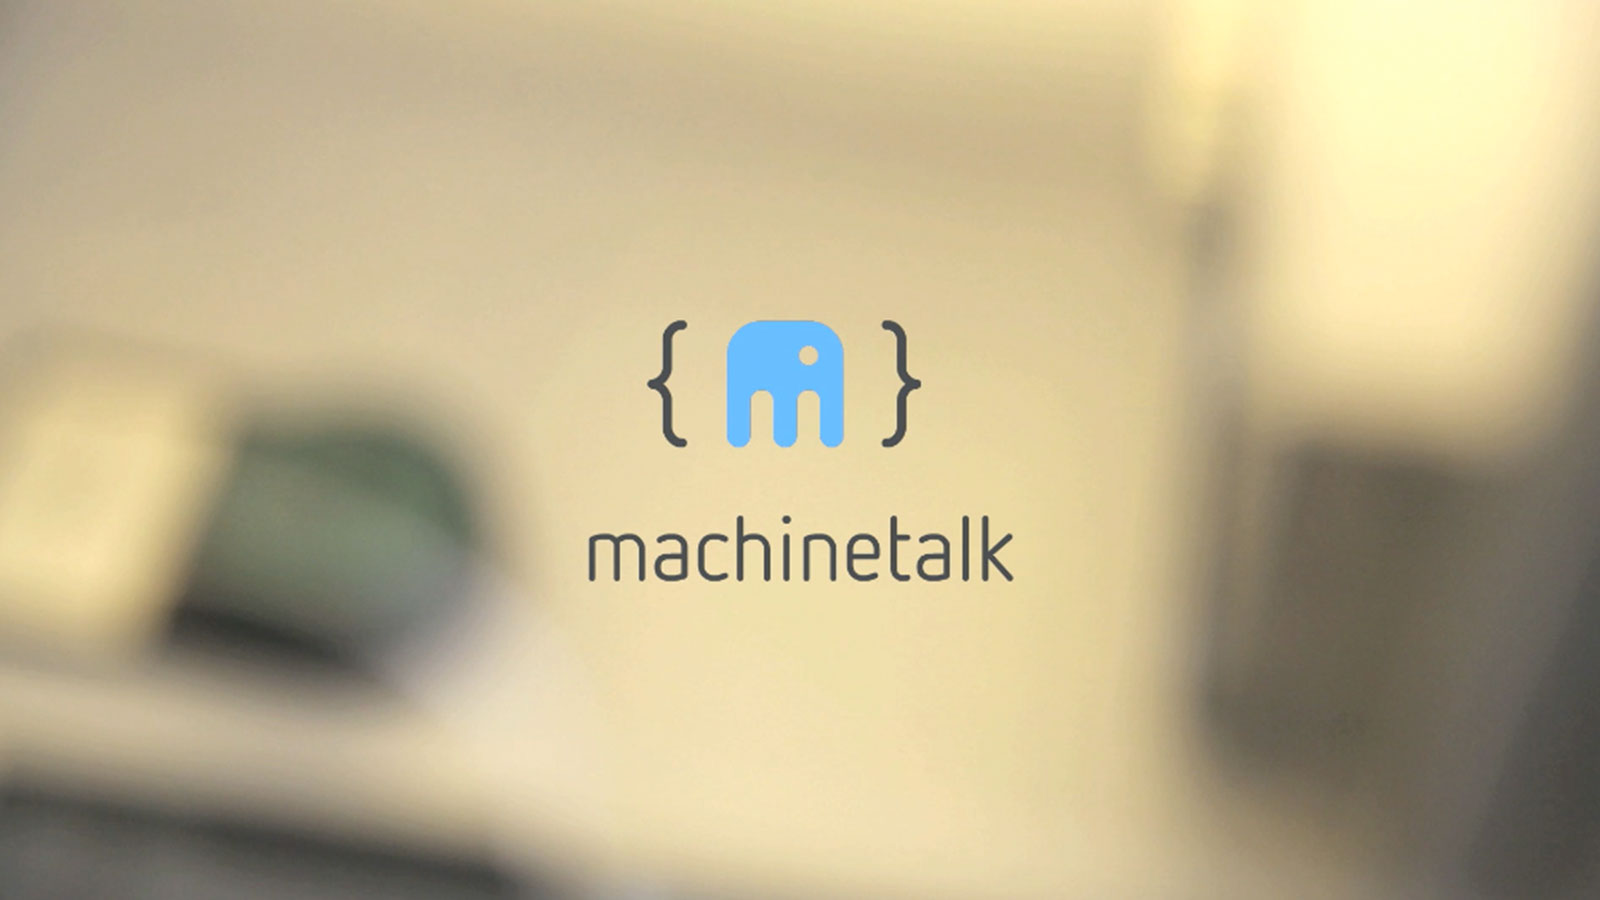 machinetalk.cc – let’s make machines talk JavaScript